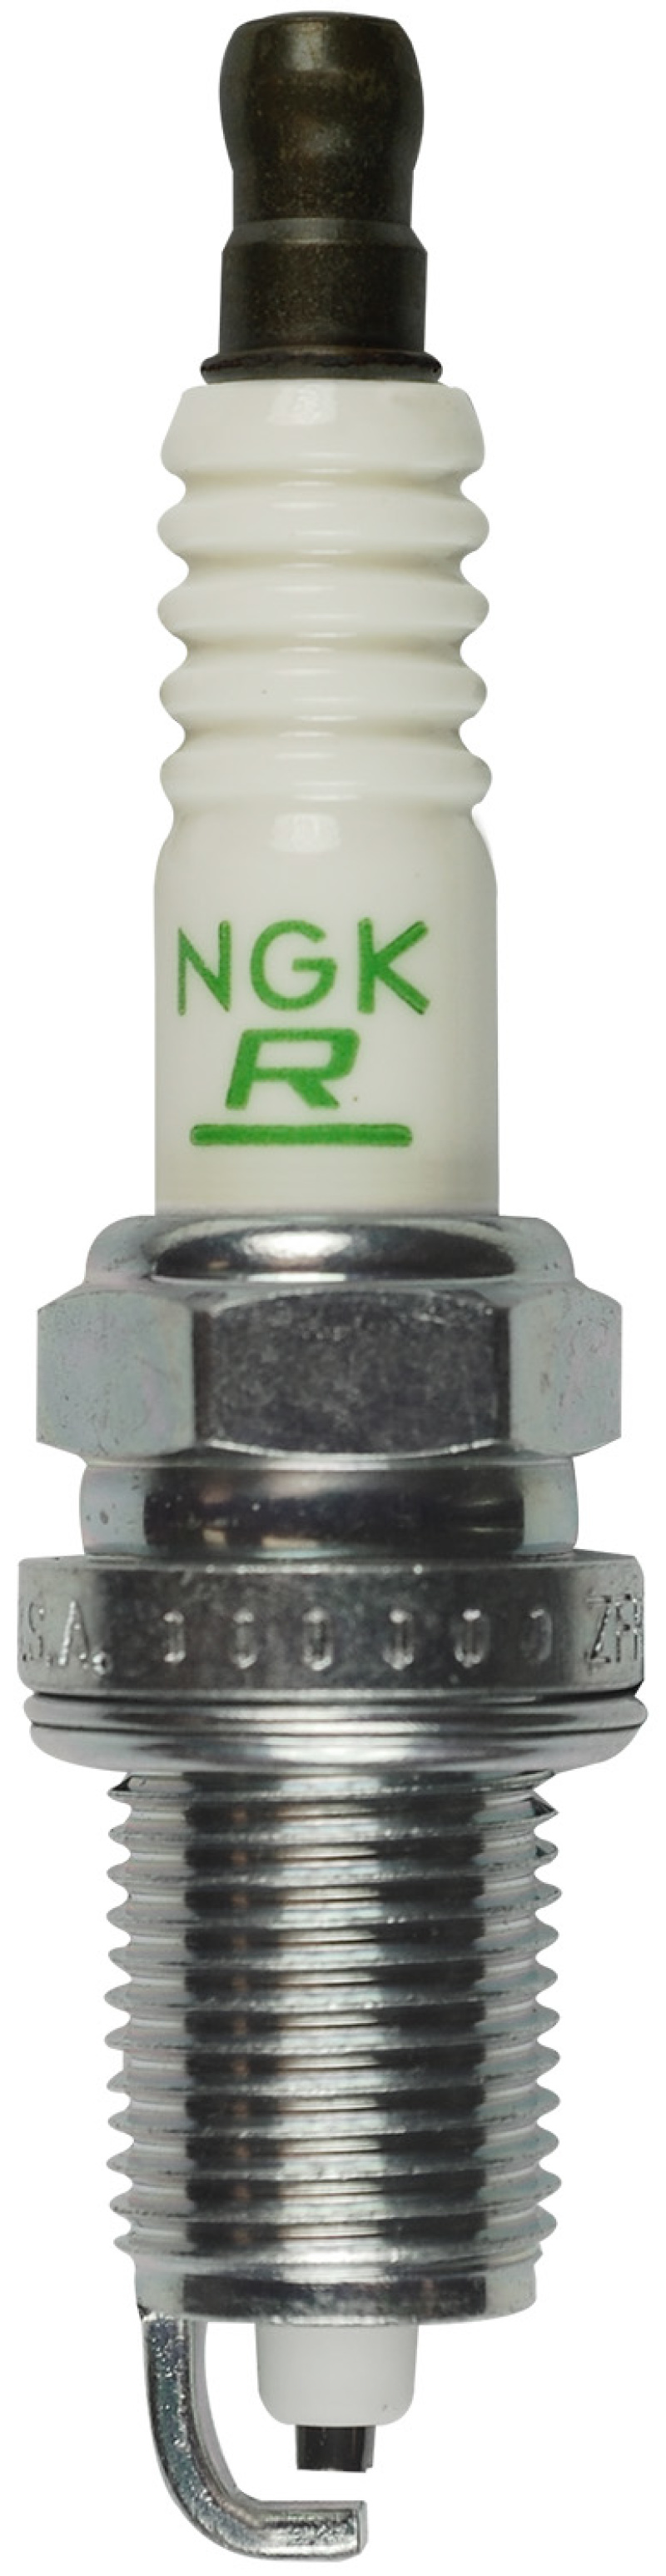 NGK Nickel Spark Plug Box of 4 (ZFR5F-11) - 2262